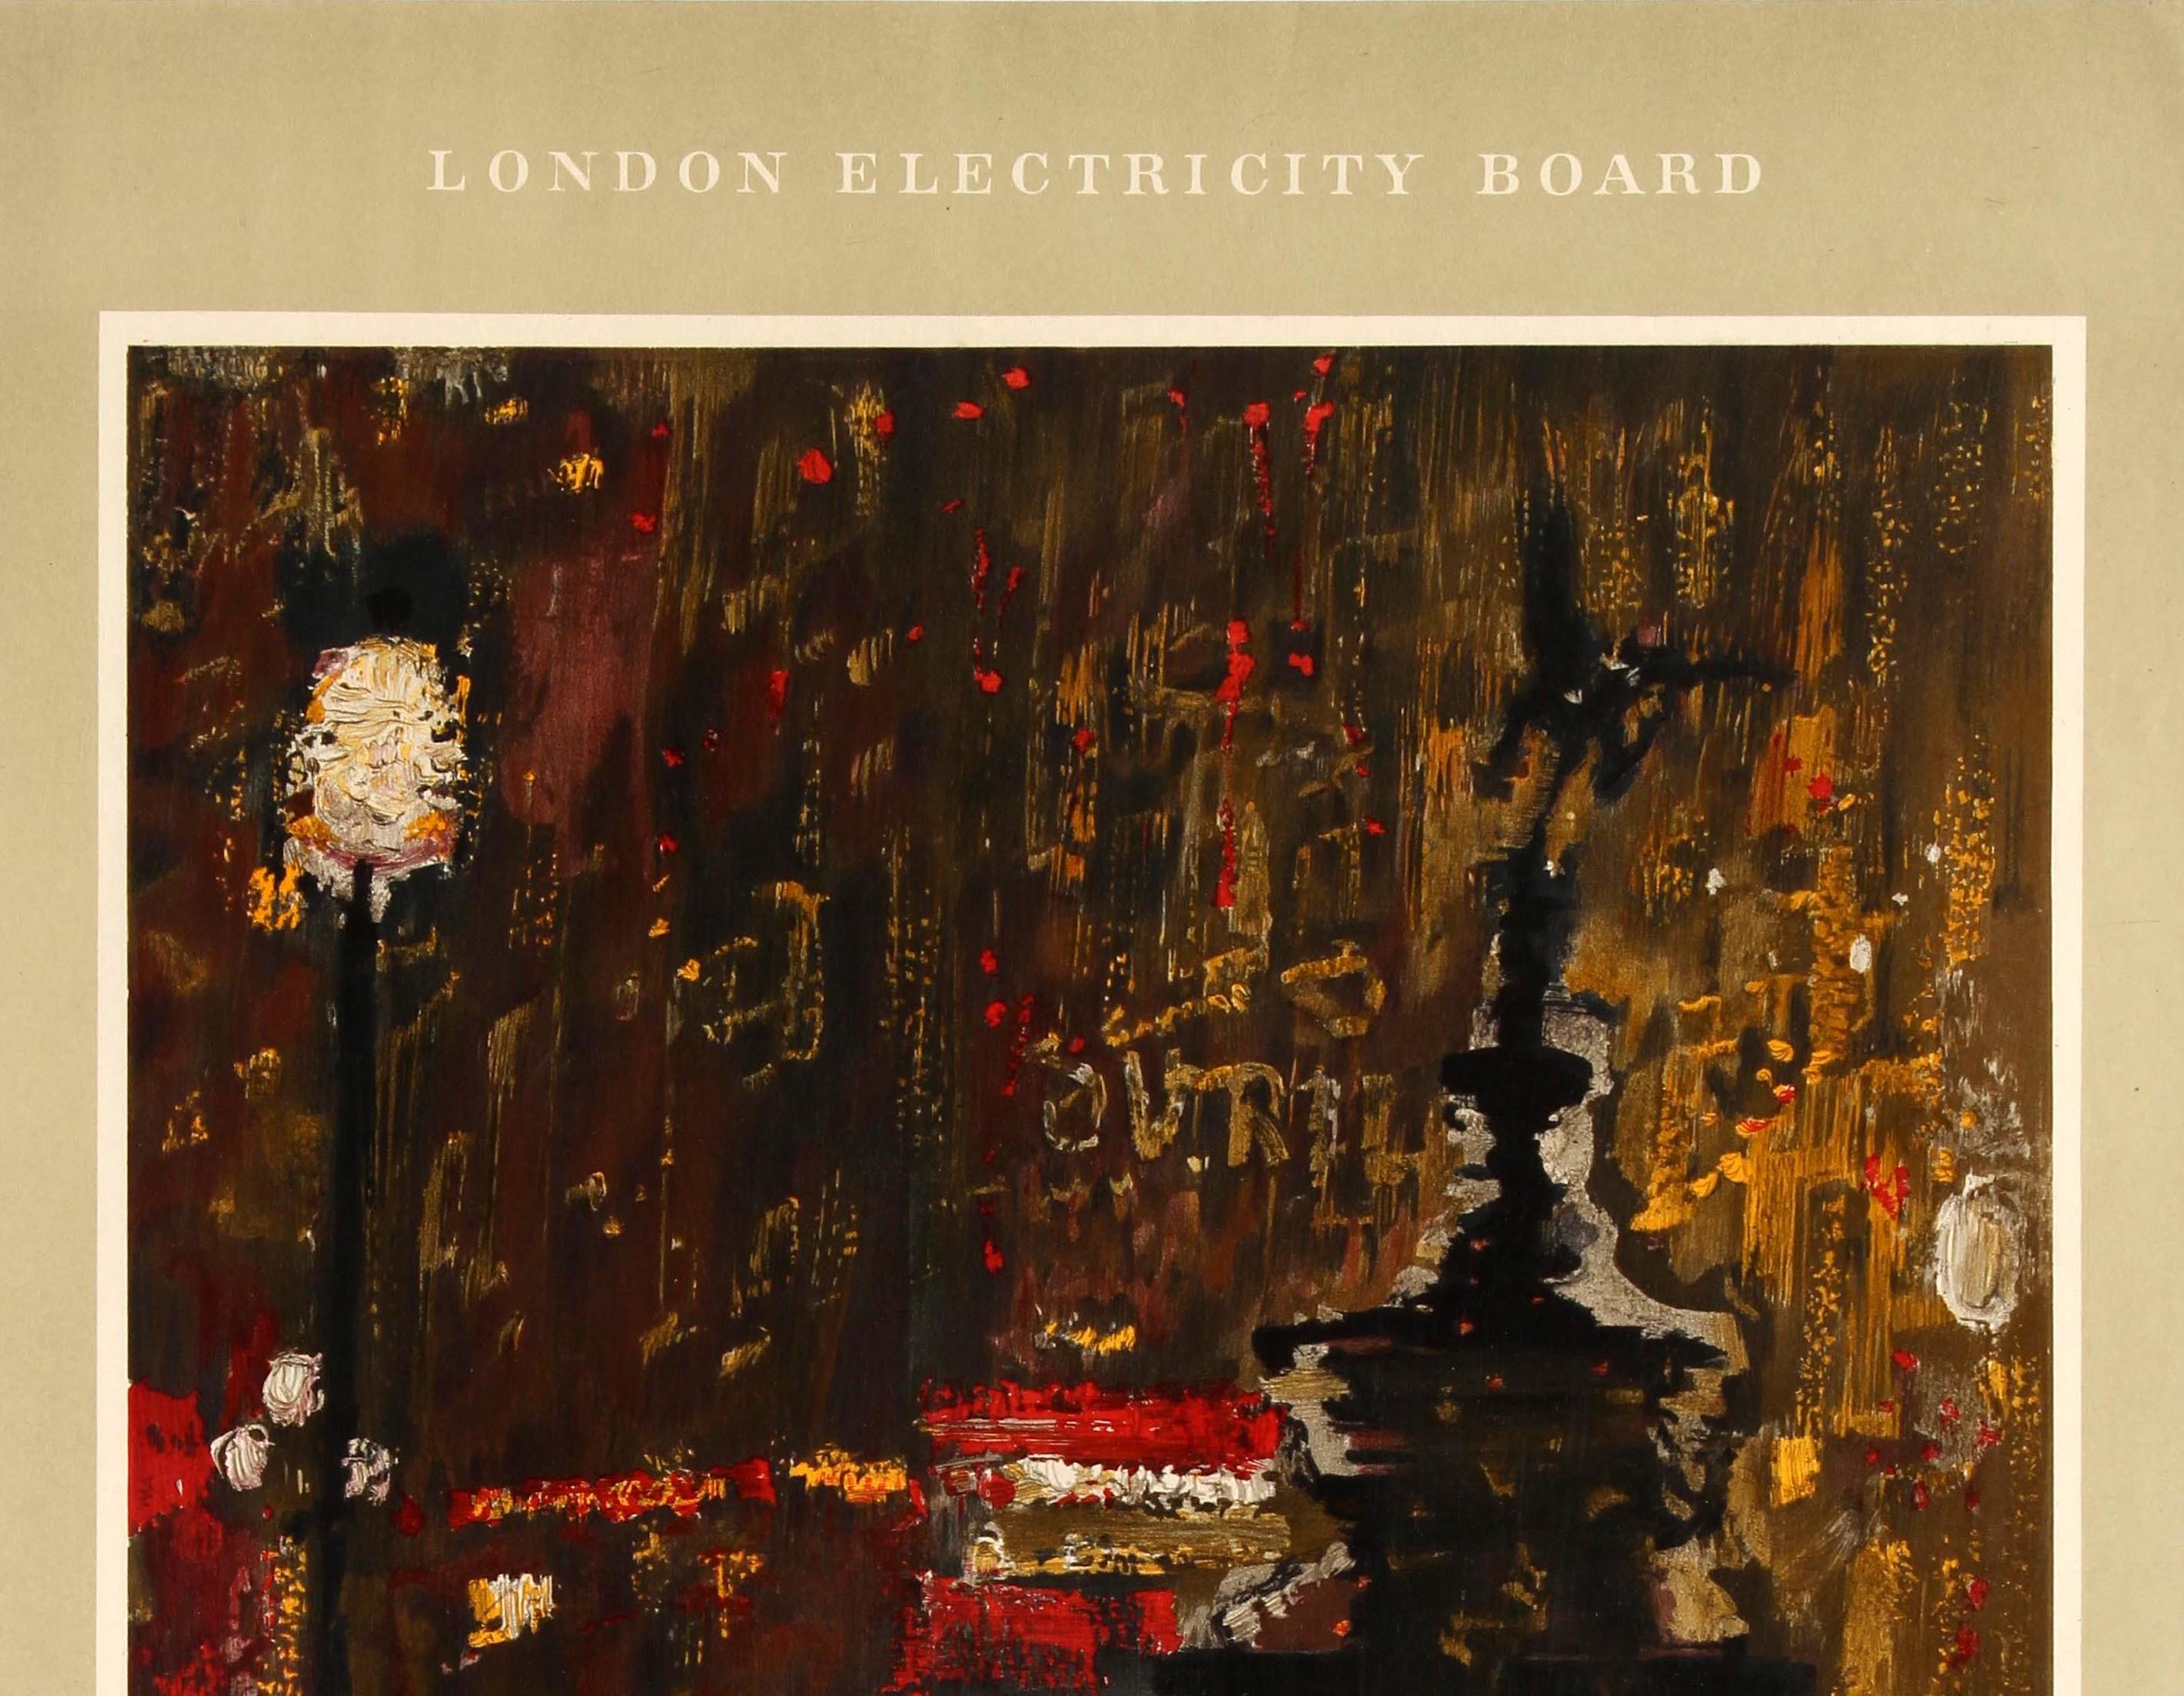 Affiche rétro originale du London Electricity Board, Power Of London, Piccadilly Eros - Print de Ruskin Spear